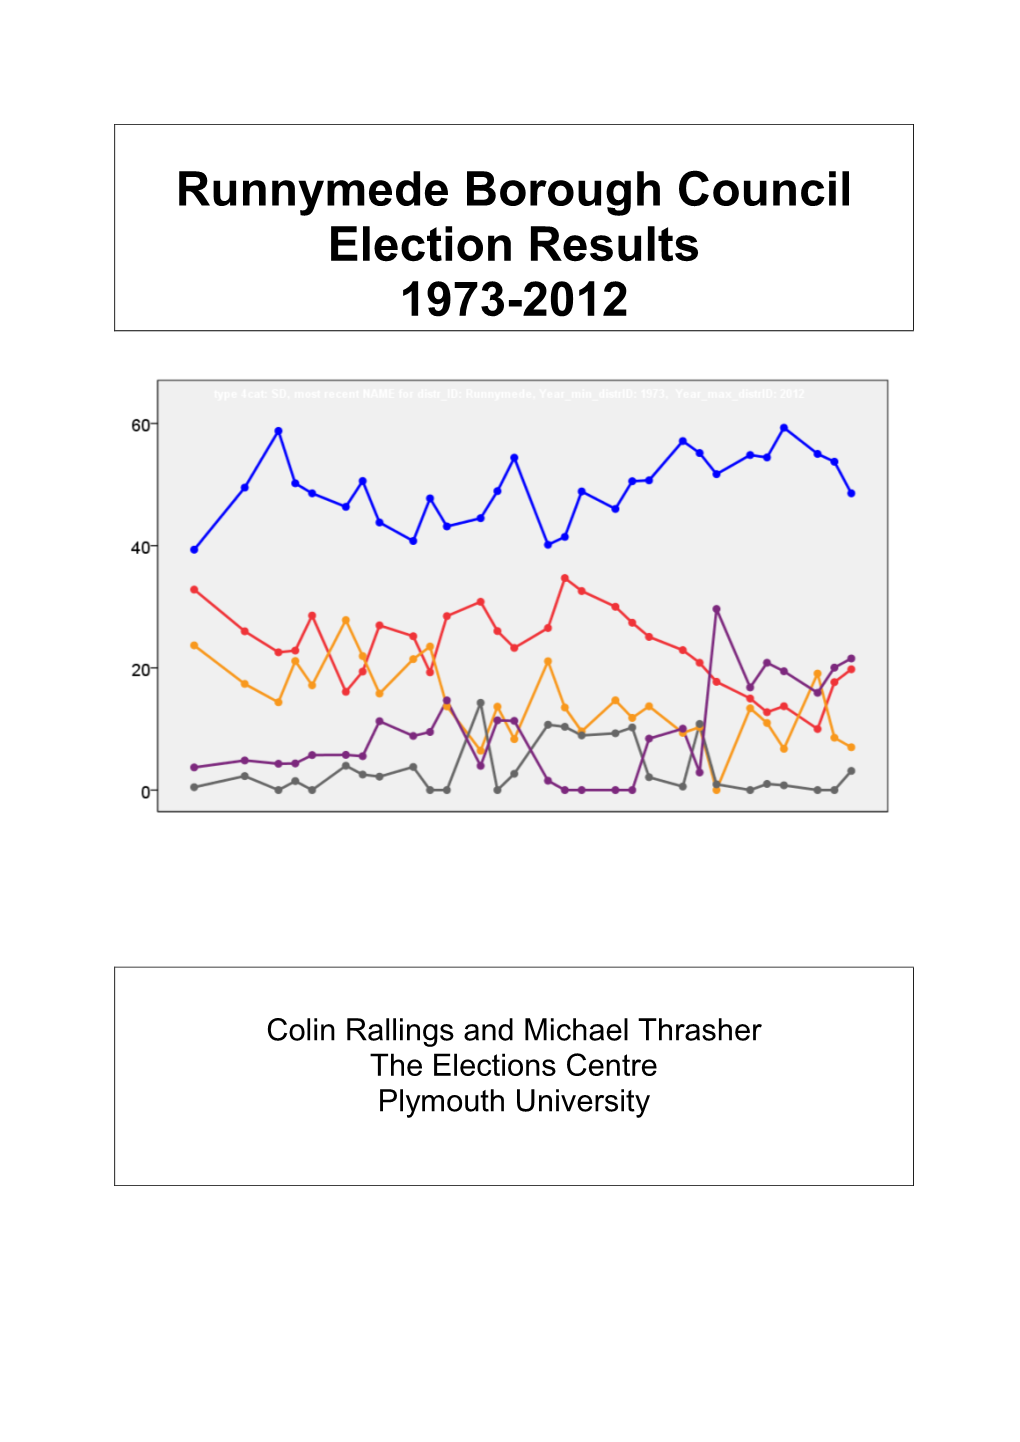 Runnymede Borough Council Election Results 1973-2012